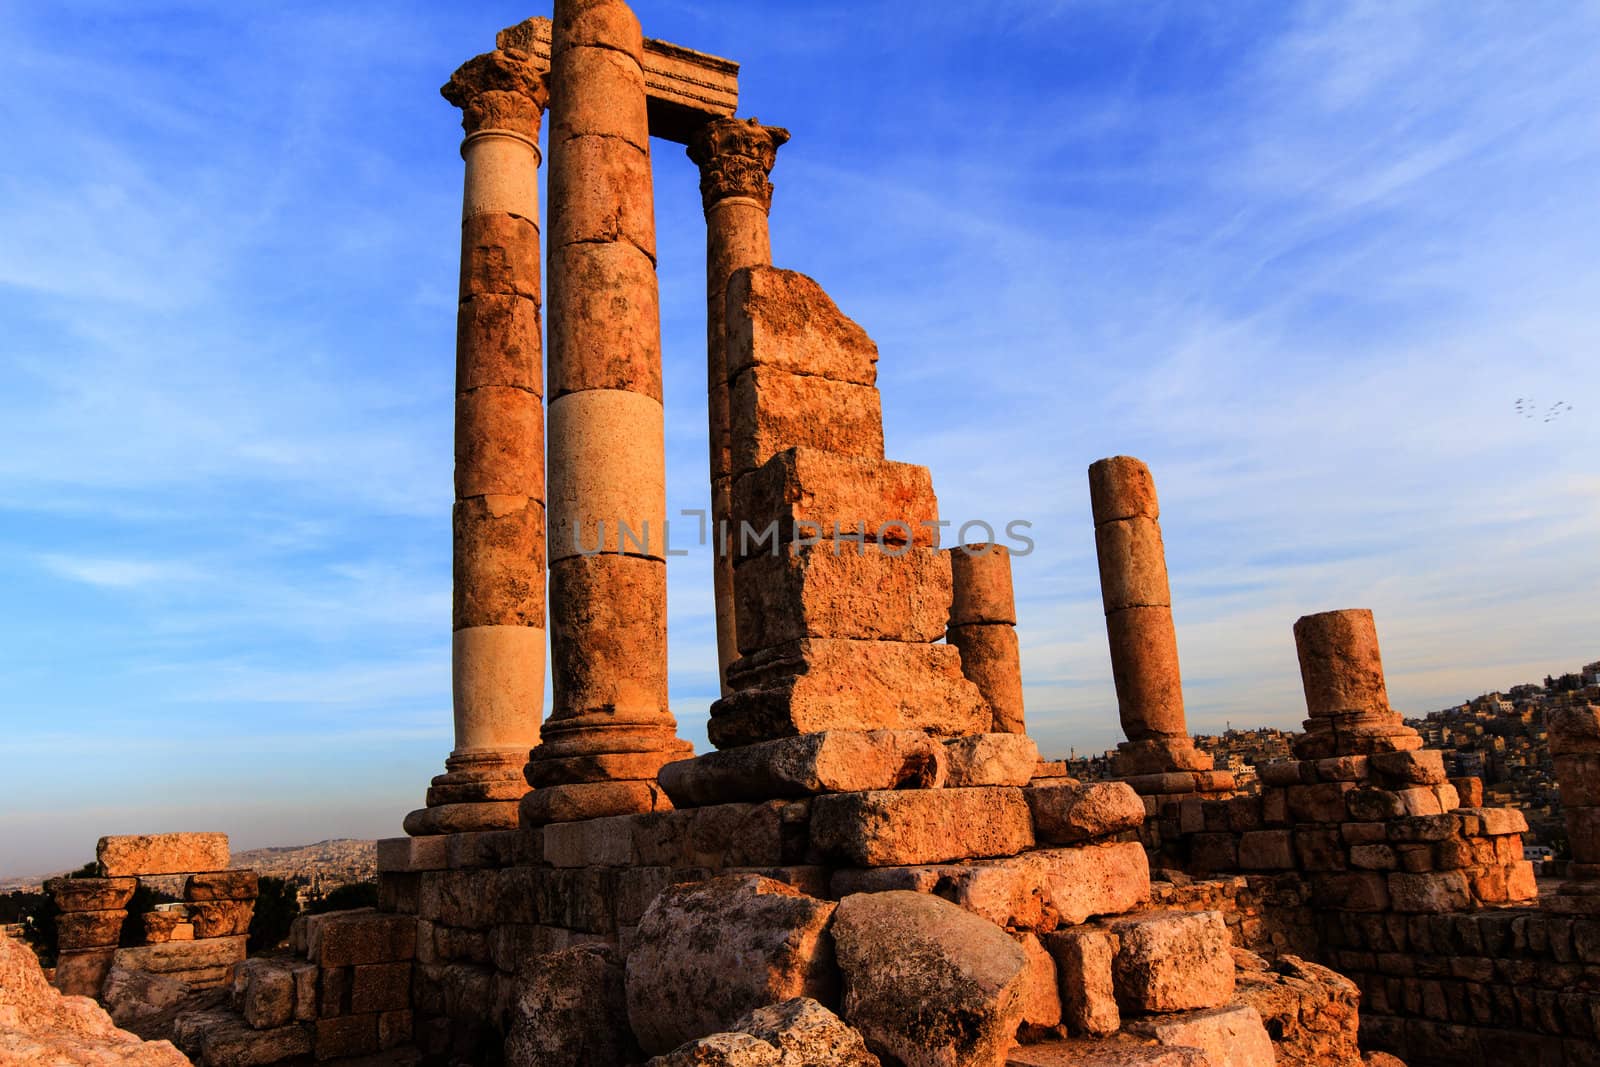 Temple of Hercules in Amman Citadel, Al-Qasr site, Jordan  by thanomphong